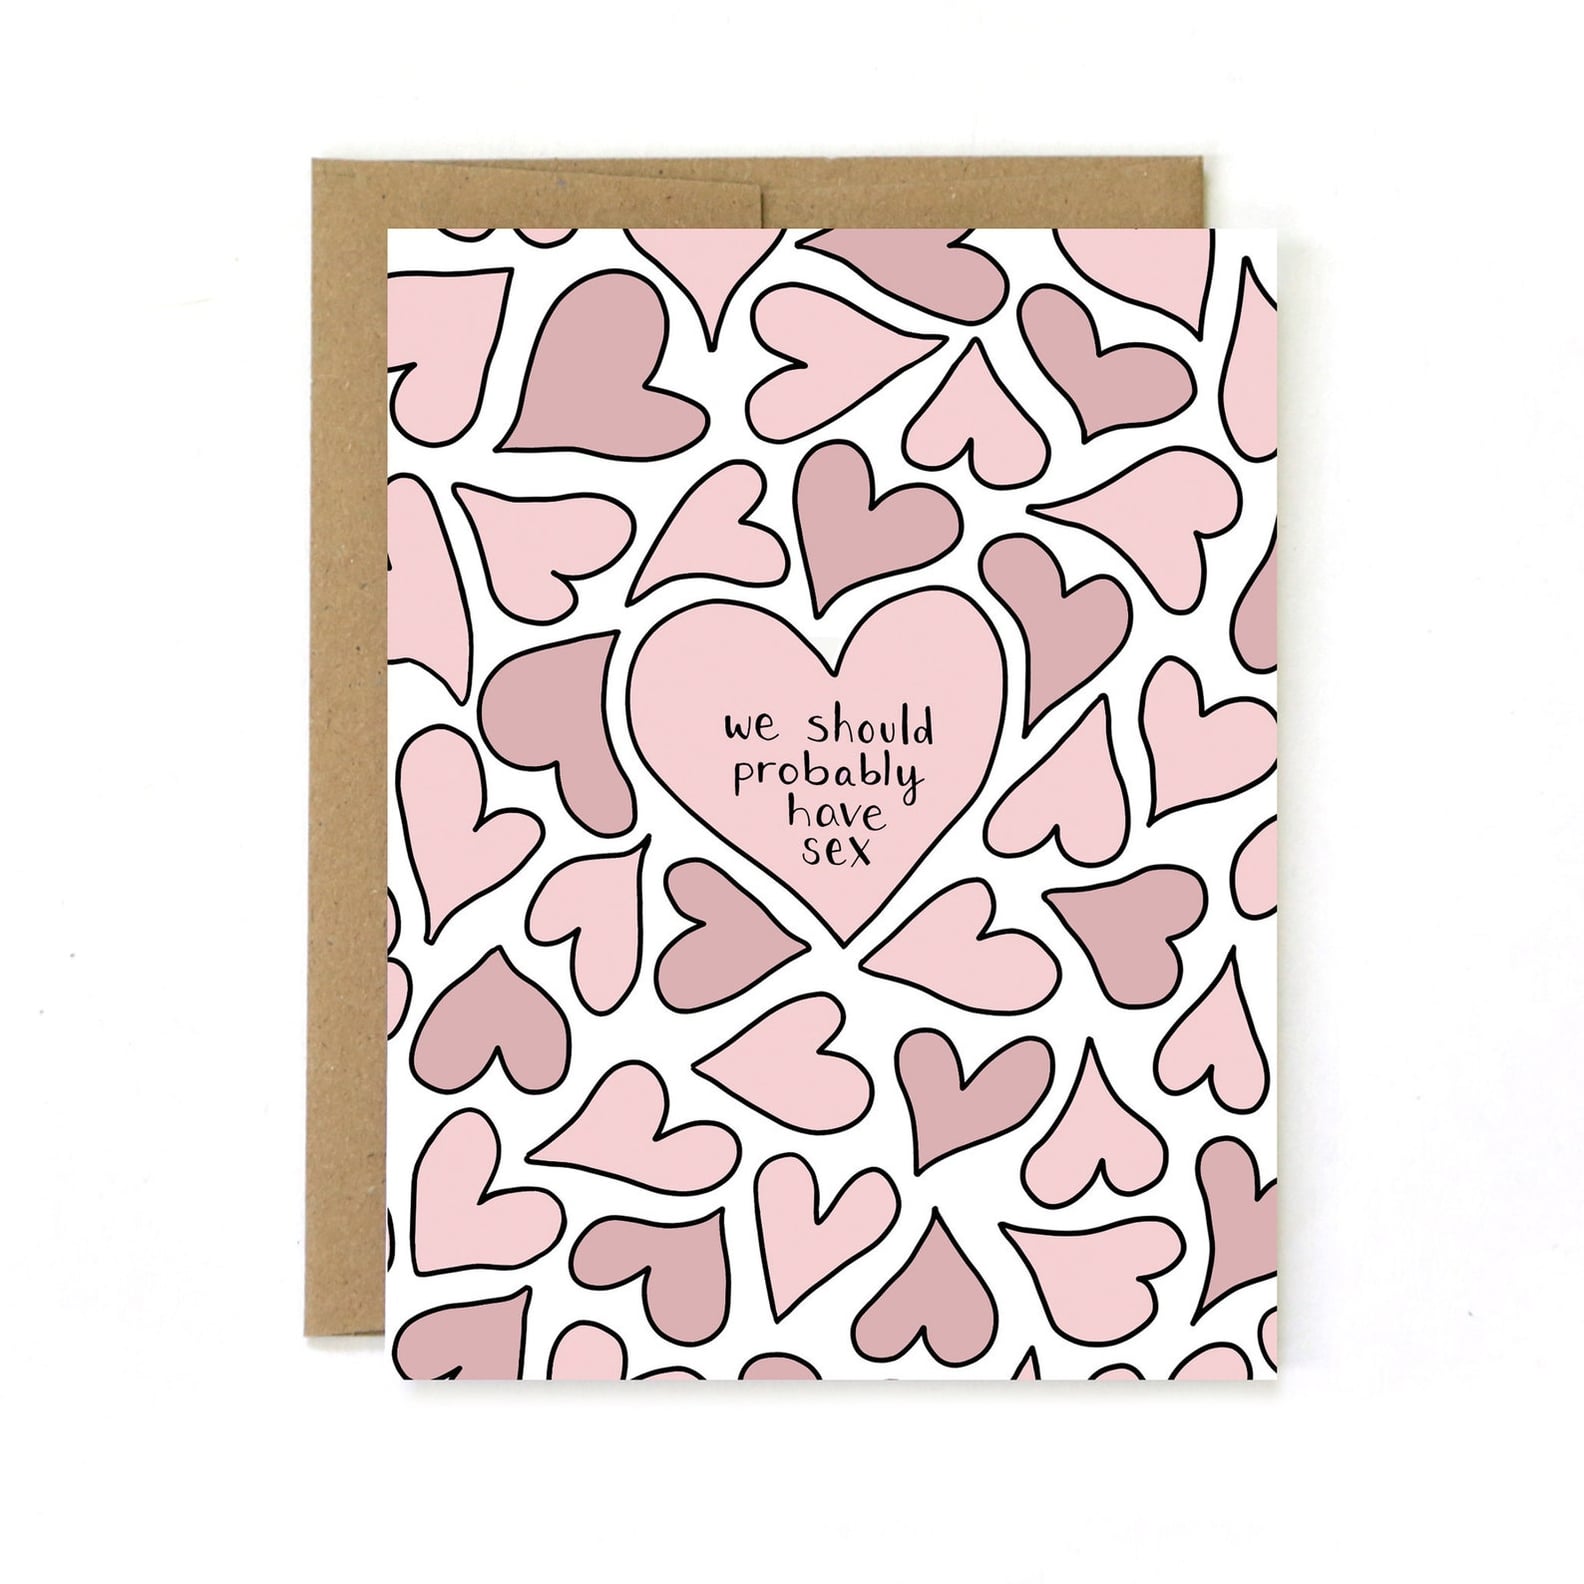 Dirty Valentine S Cards Popsugar Love Sex